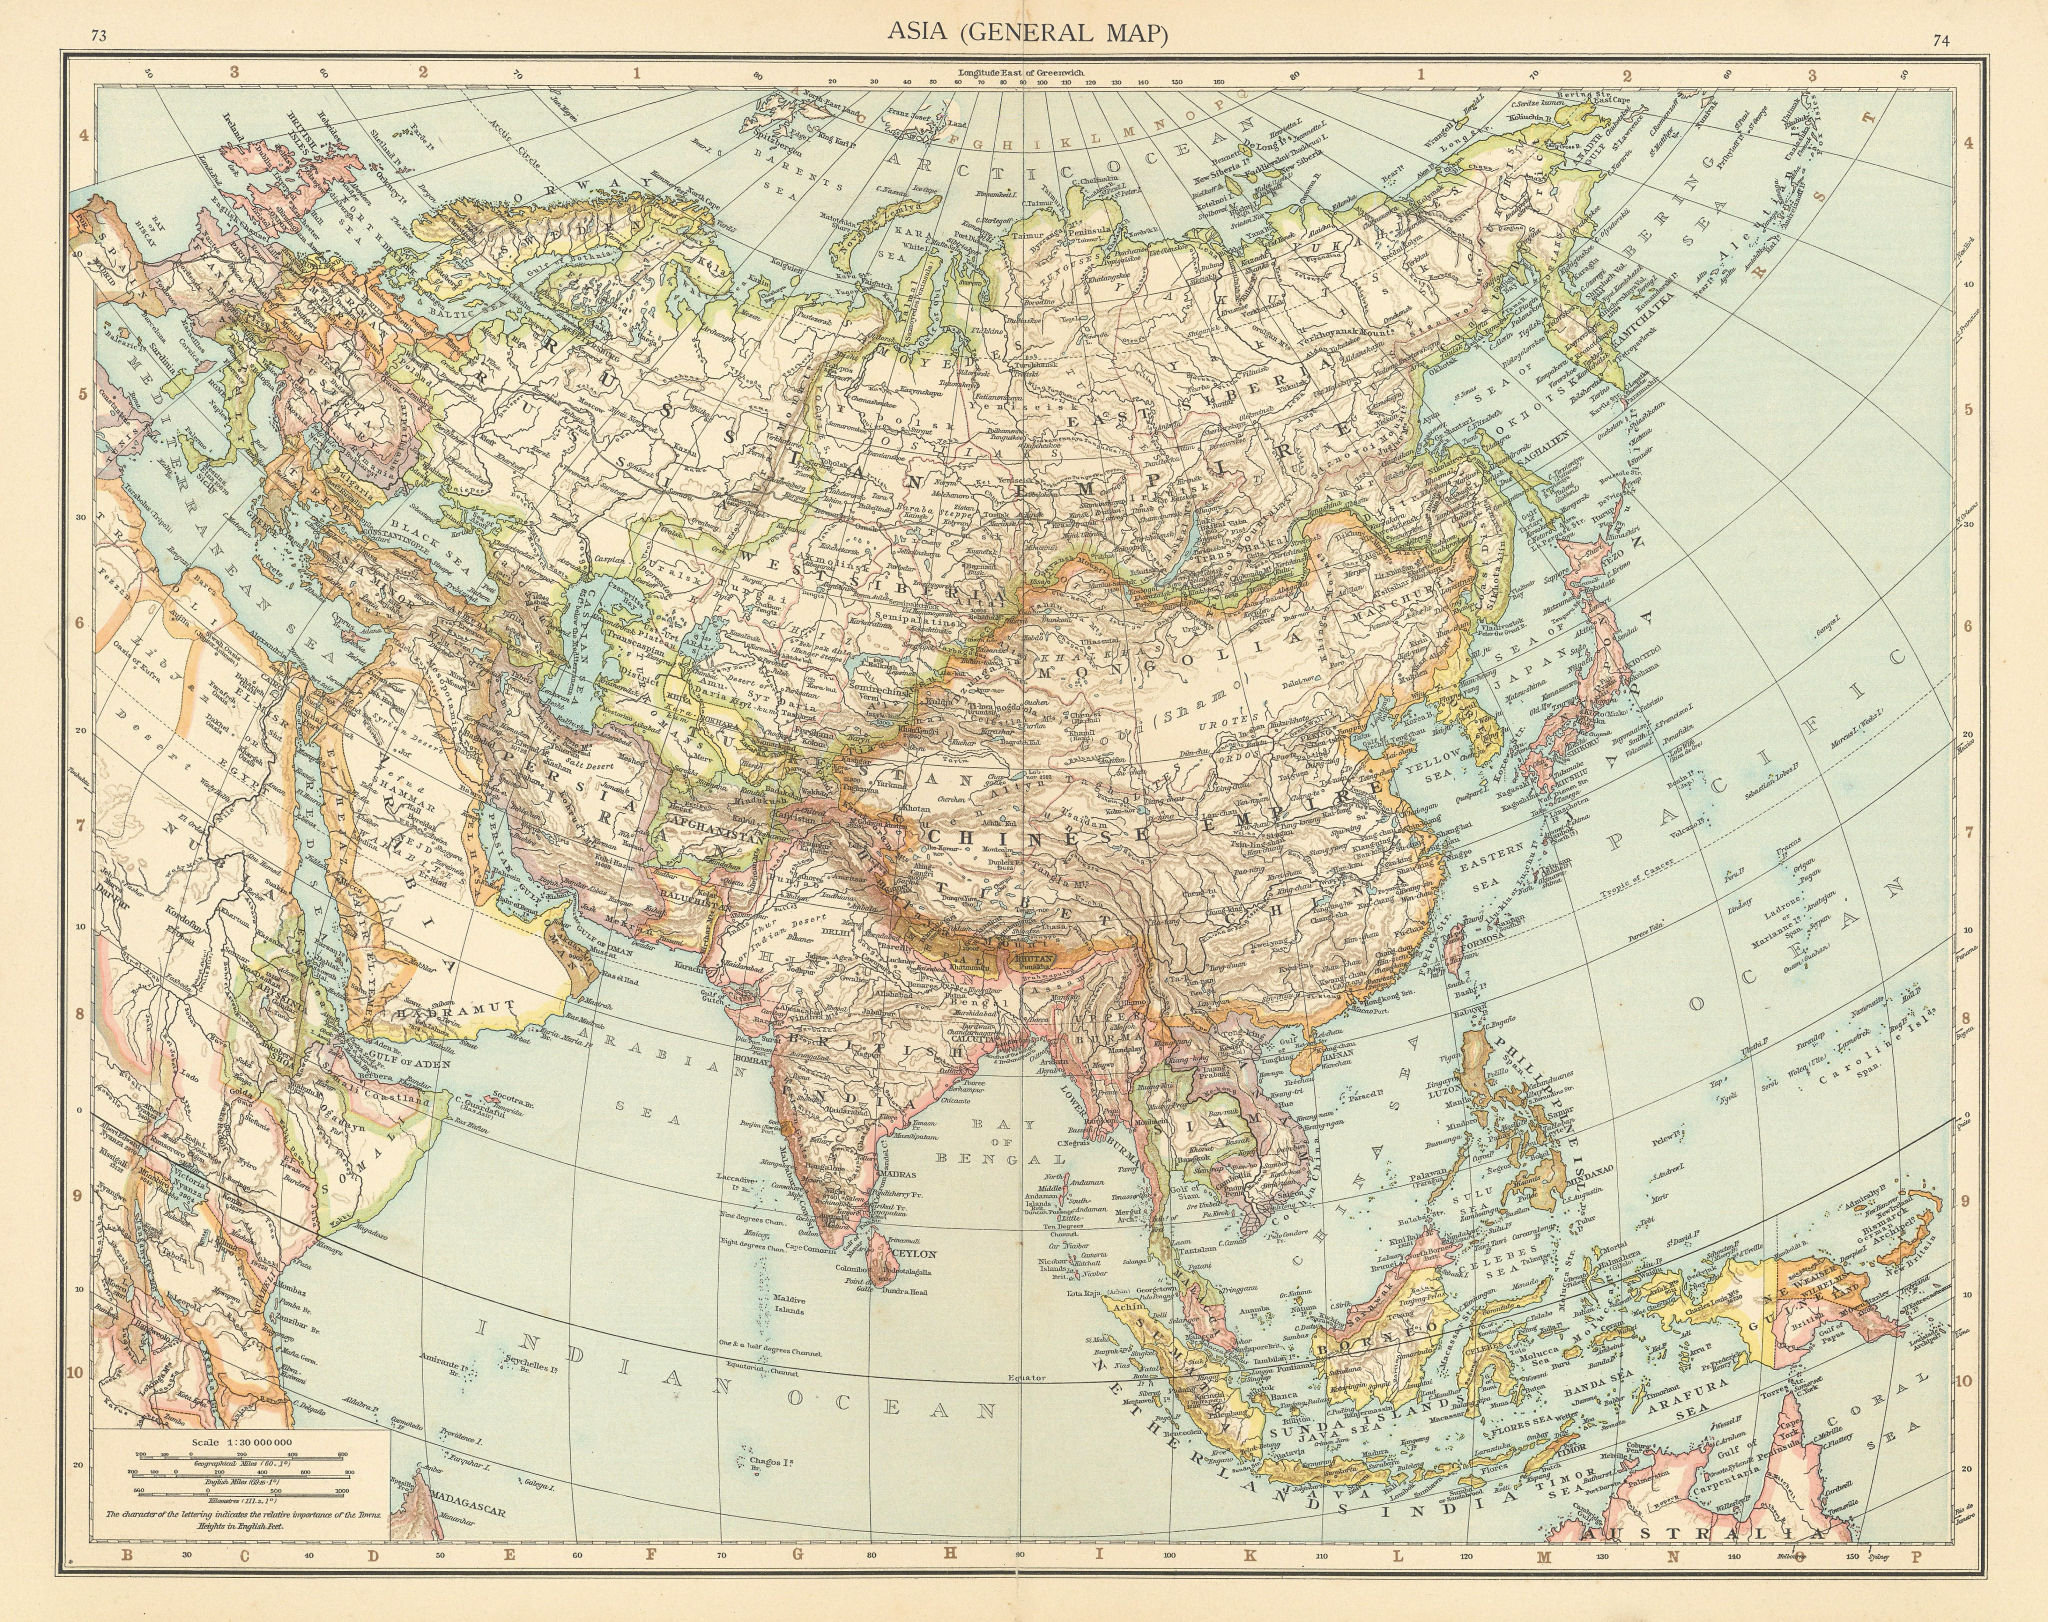 Asia. Persia Hadramut British India Siam Annam Chinese Empire. TIMES 1895 map